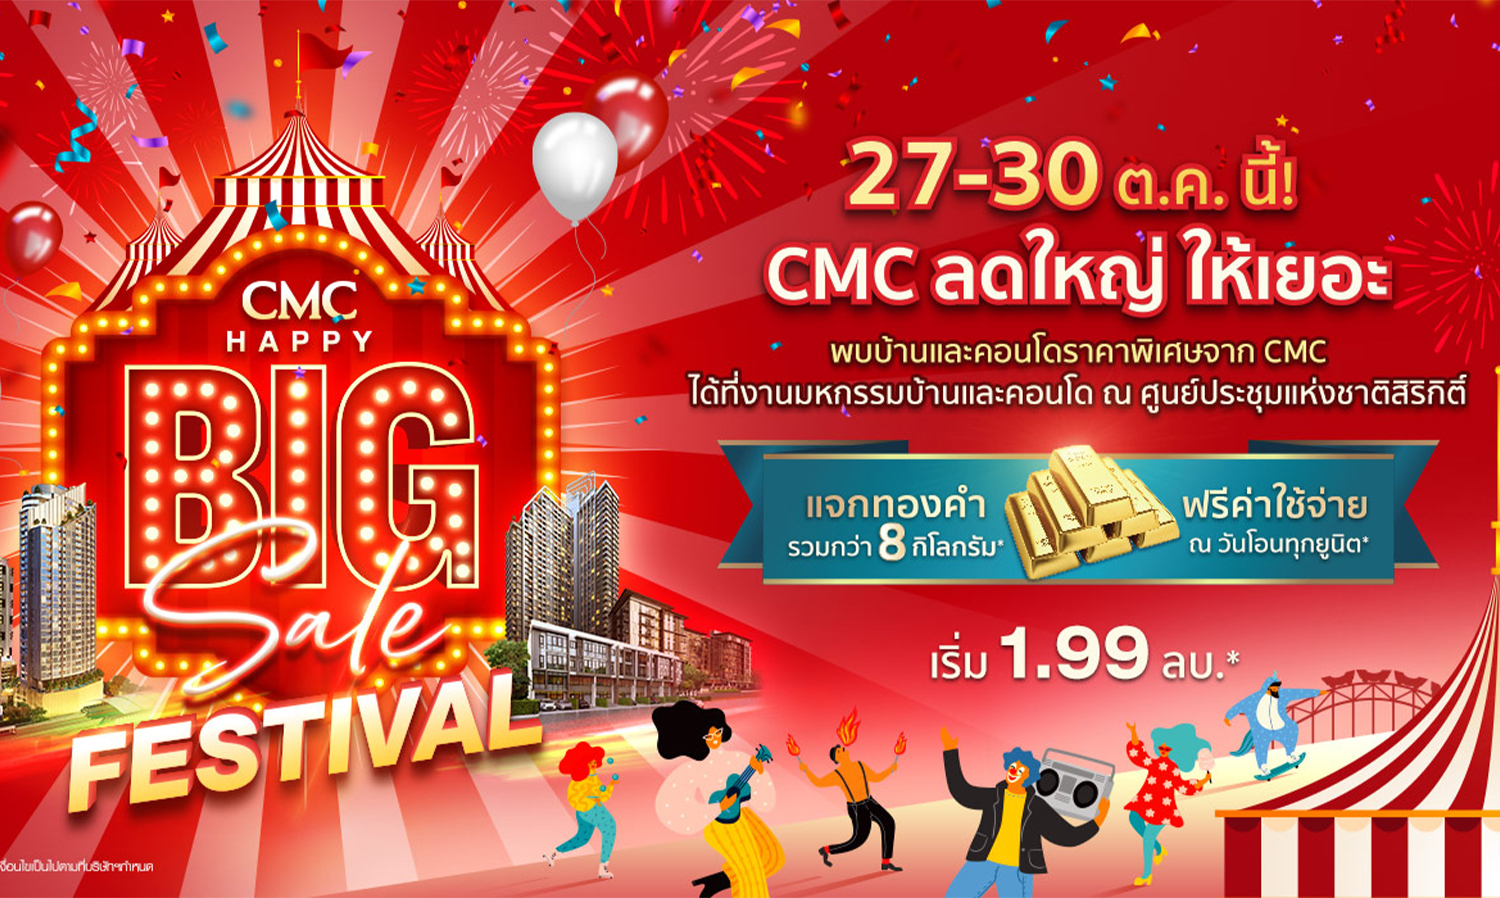 cmc-happy-big-sale-festival-ลดใหญ่-ให้เยอะ-แจกทองคำรว-